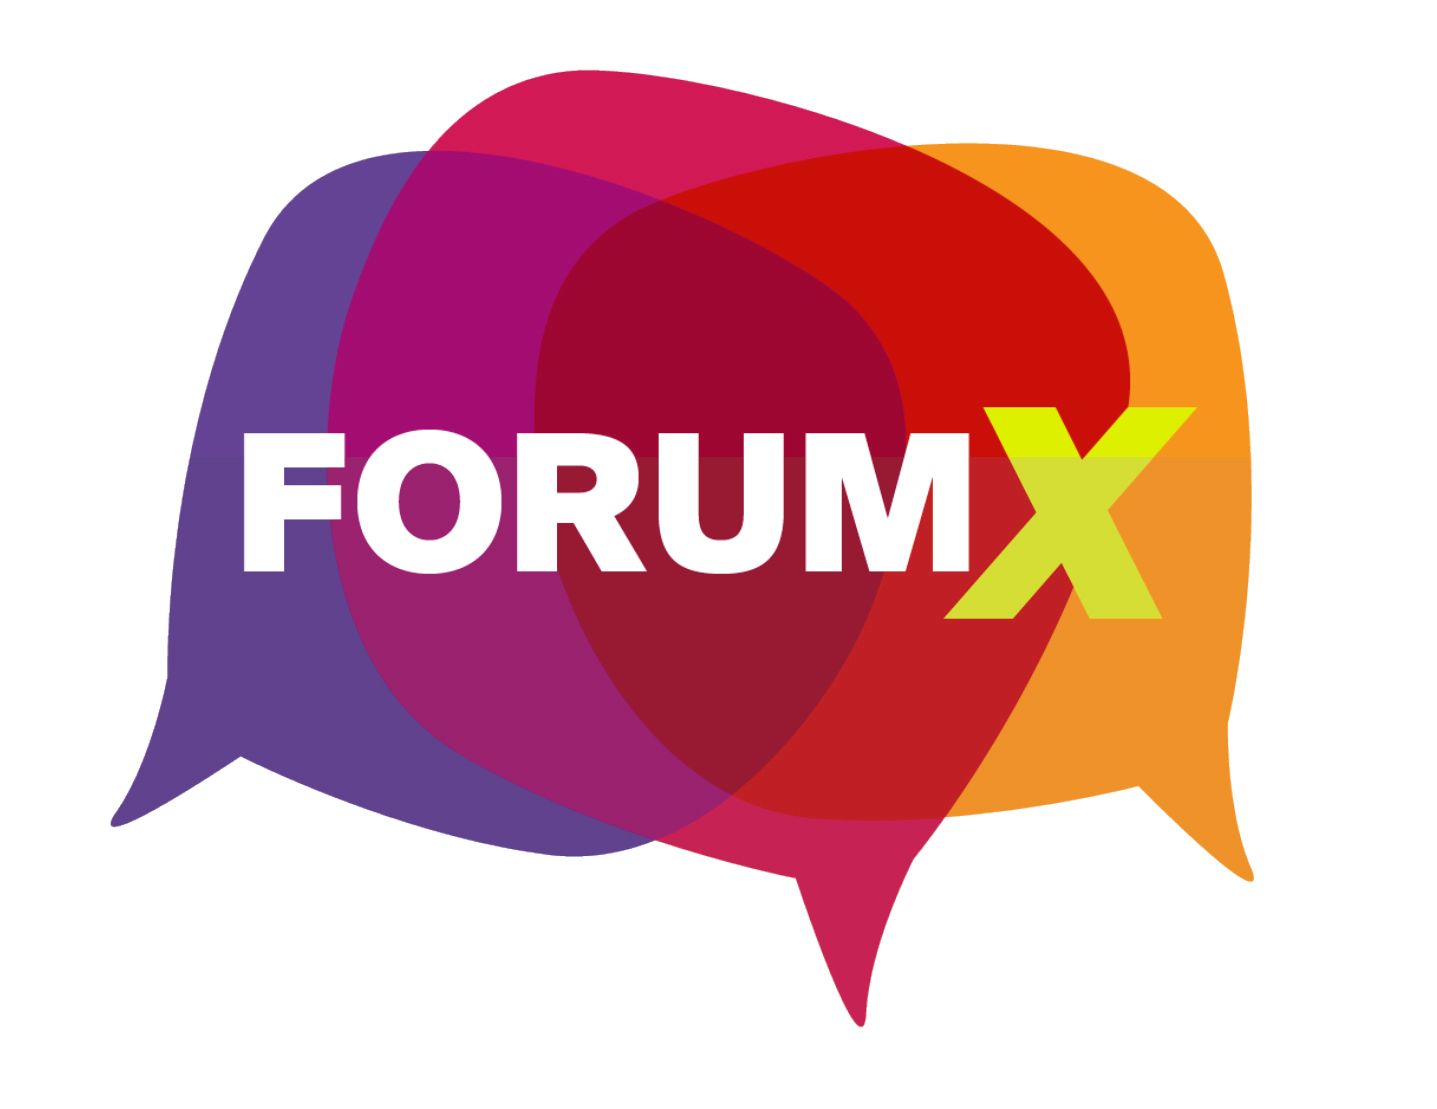 Forum X (c) Forum X